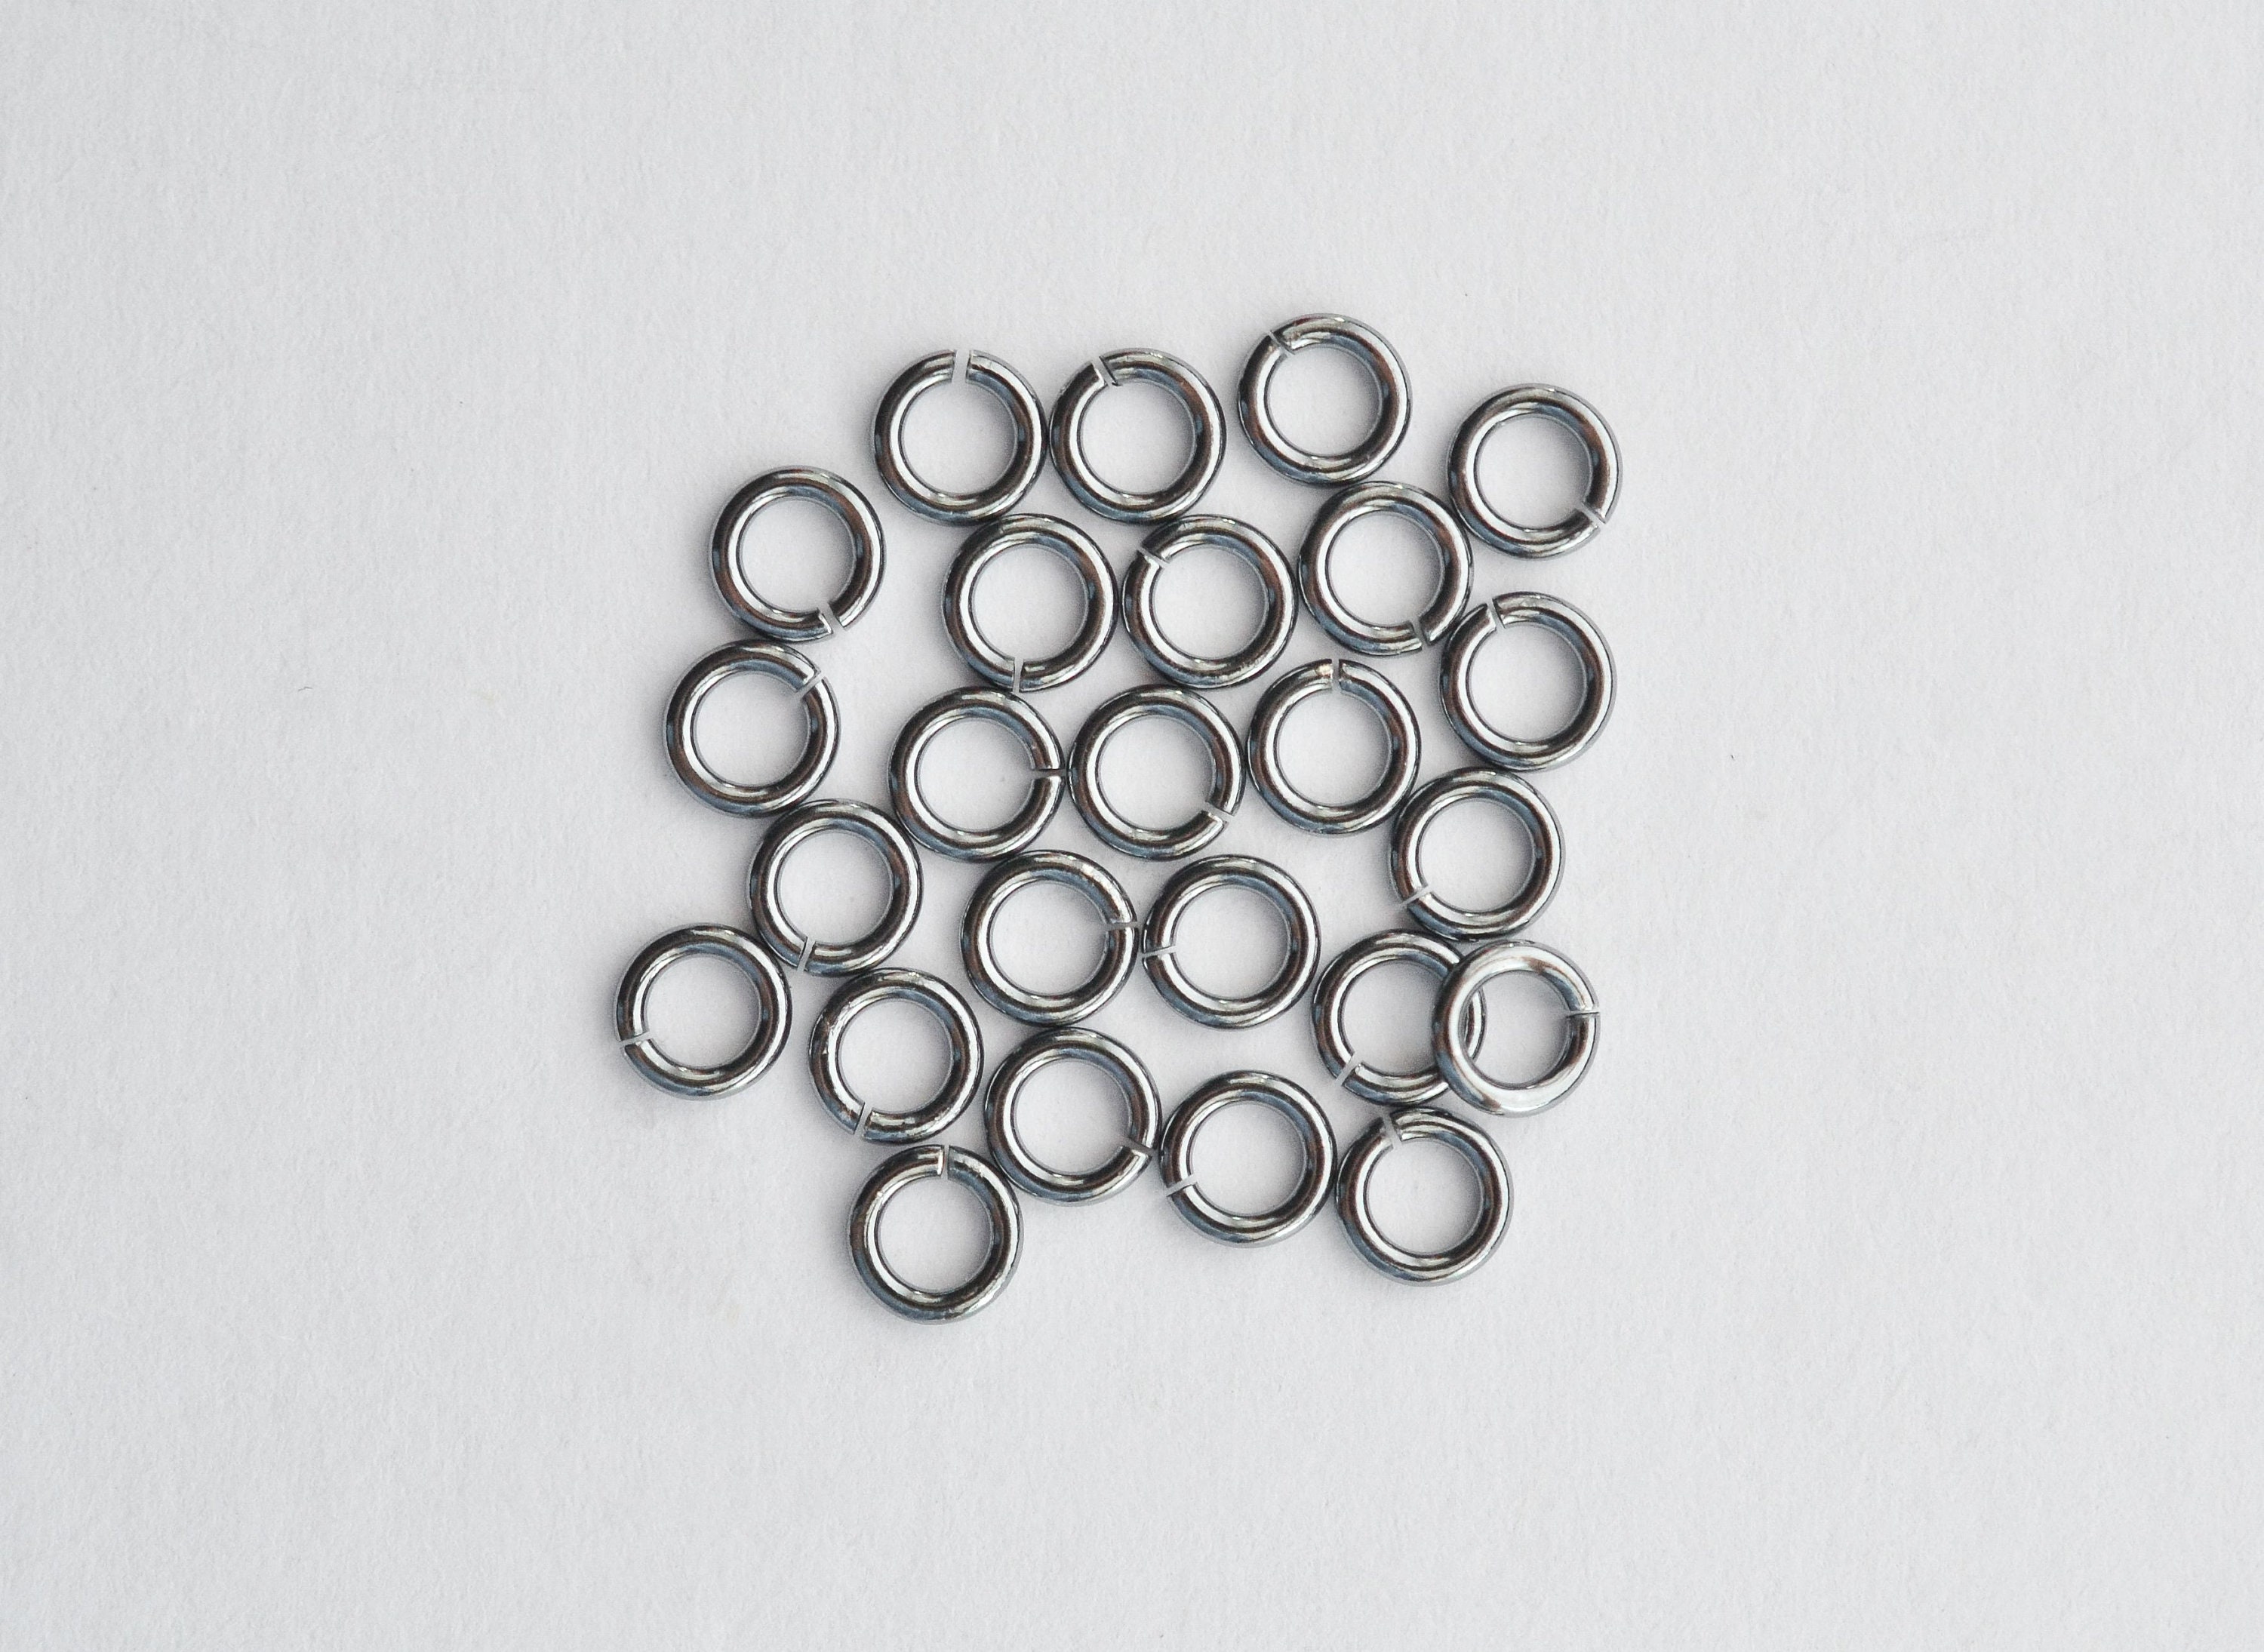 Metal Curtain/Macramé Rings - 50mm x 3.8mm - Silver - Pack of 2